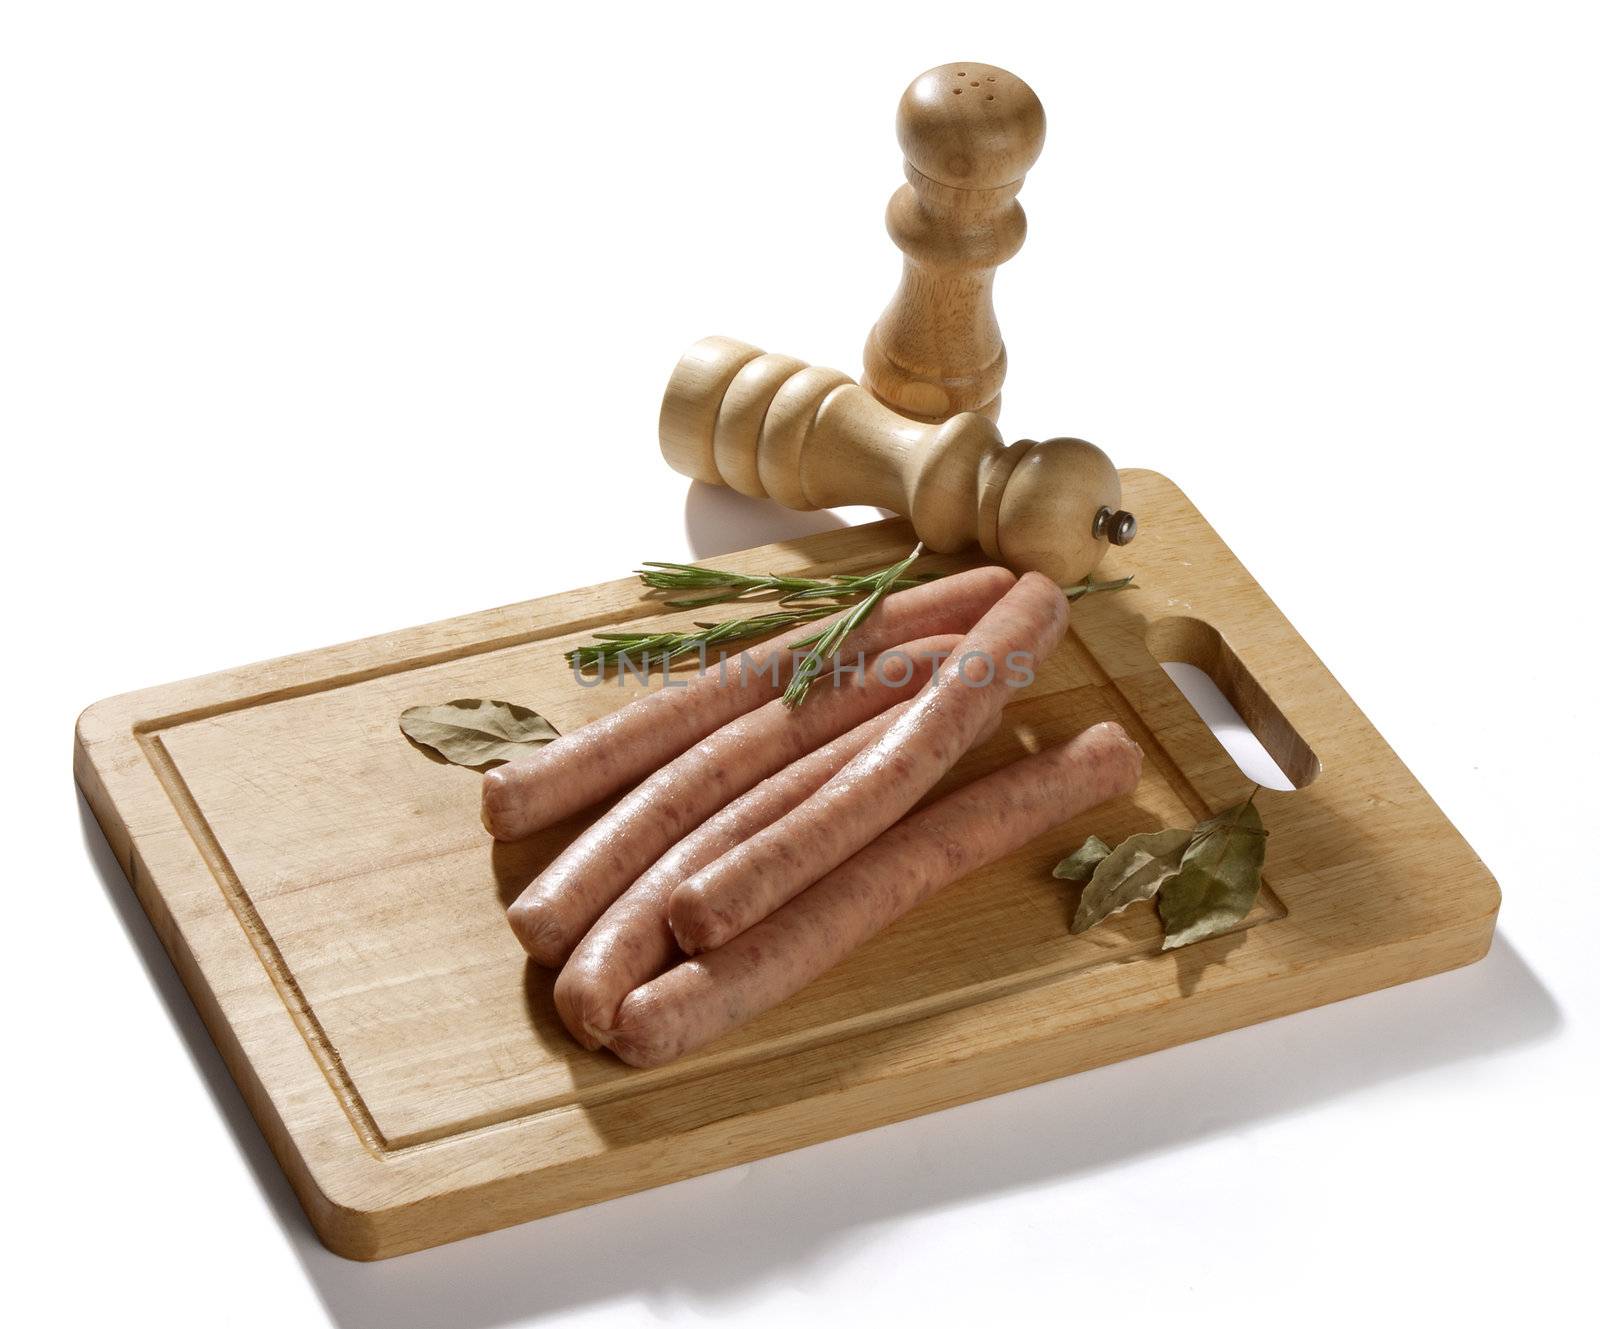 Bavarian sausages by Angorius